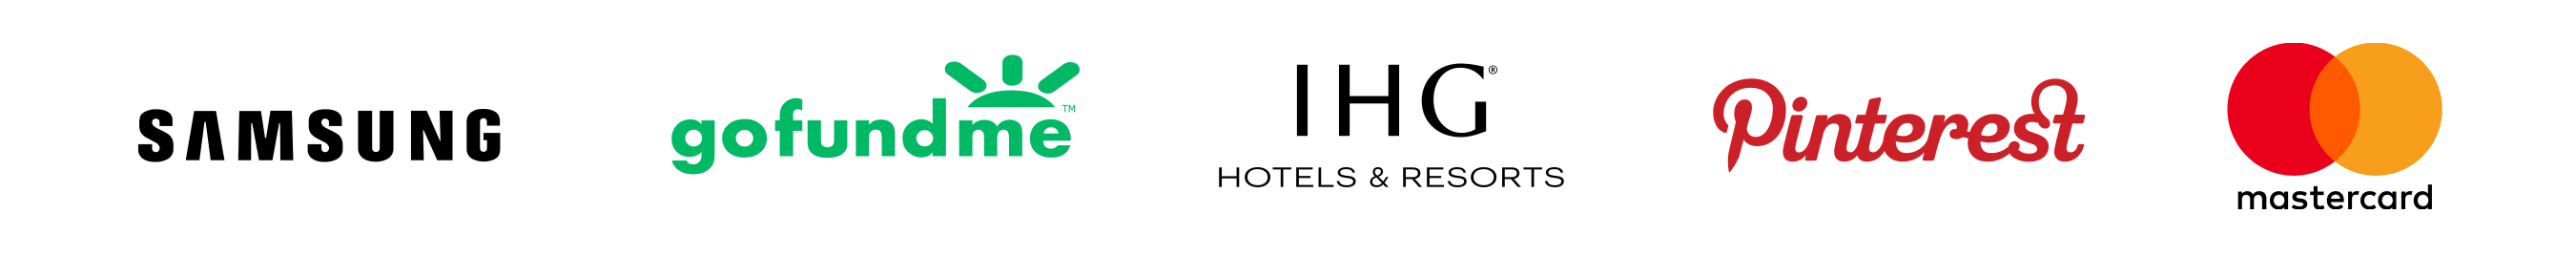 Samsung logo, gofundme logo, IGH Hotel and Resorts logo, Pintrest logo, Mastercard logo